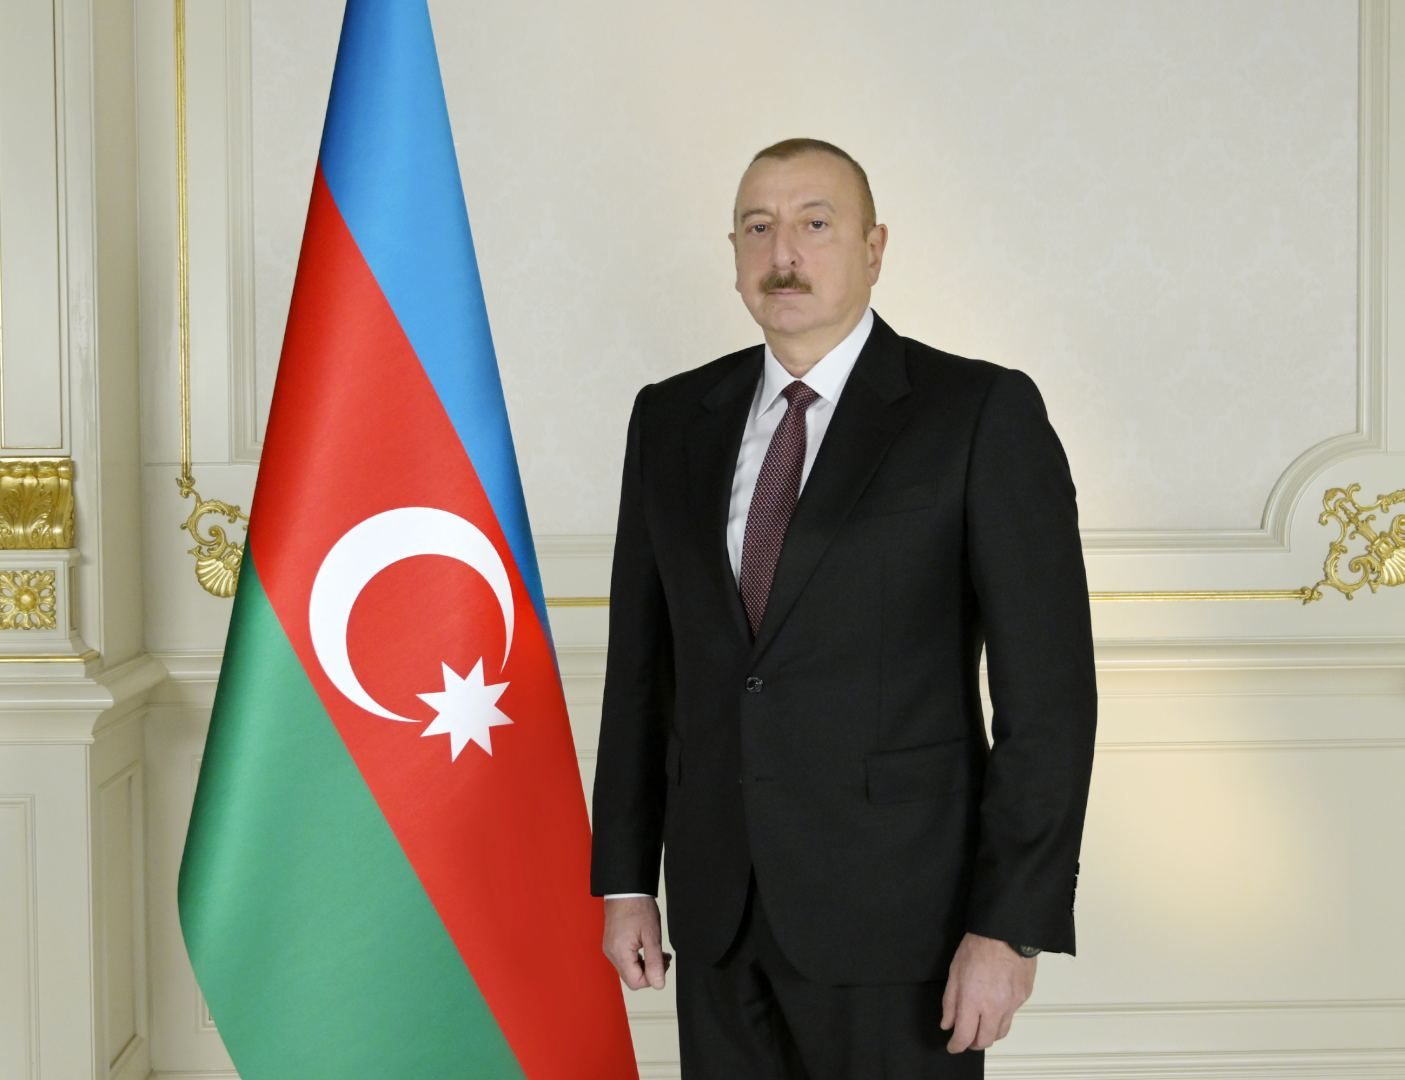 President of Serbia congratulates President Ilham Aliyev